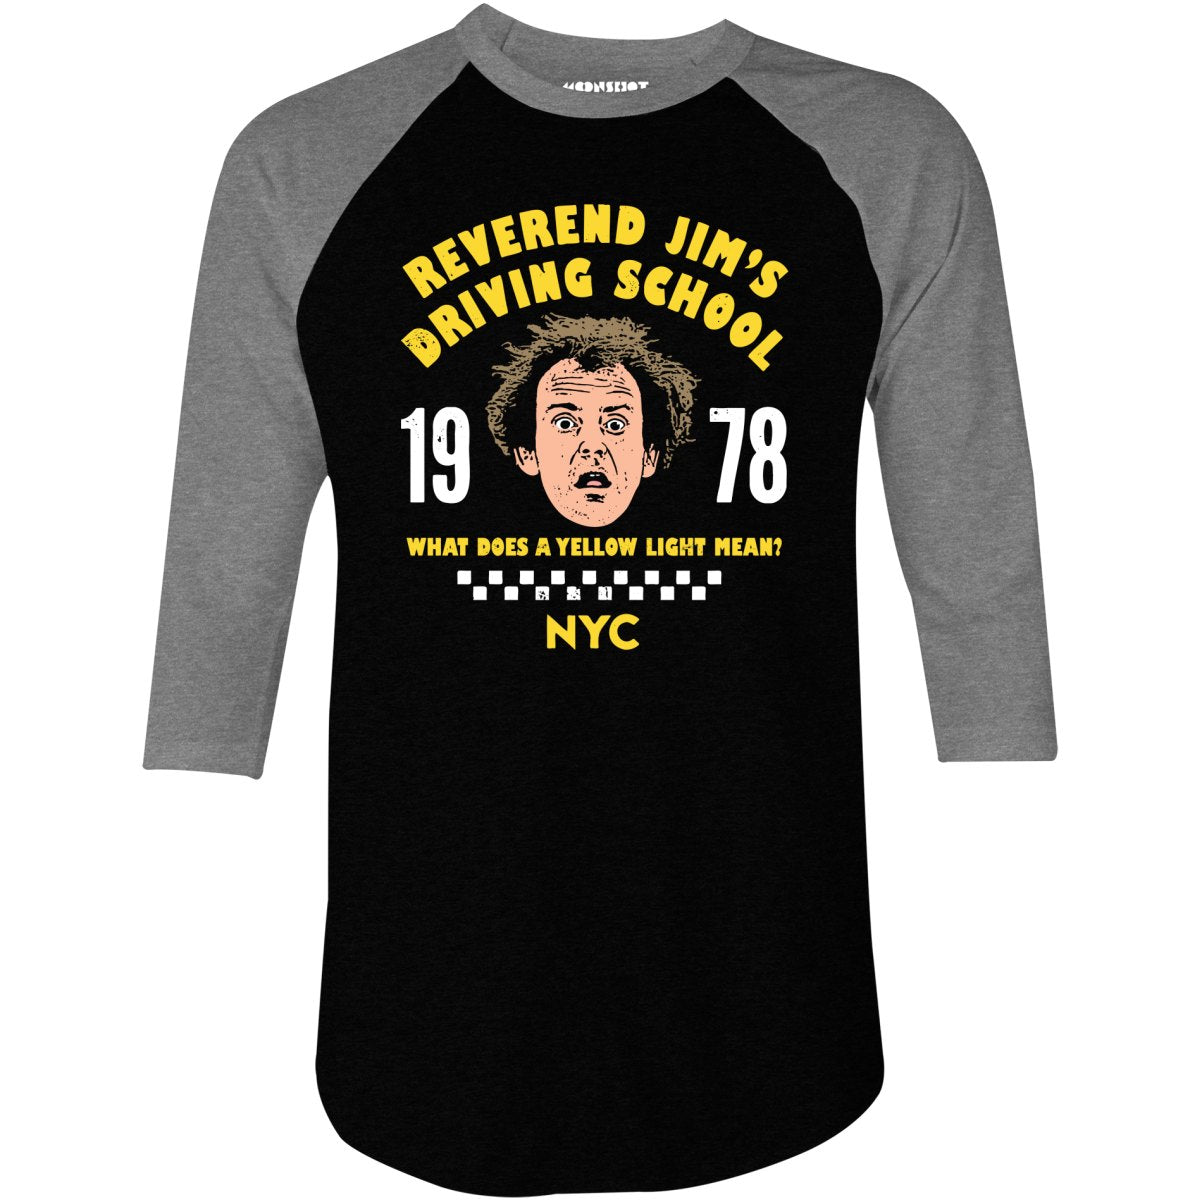 Reverend Jim's Driving School - 3/4 Sleeve Raglan T-Shirt